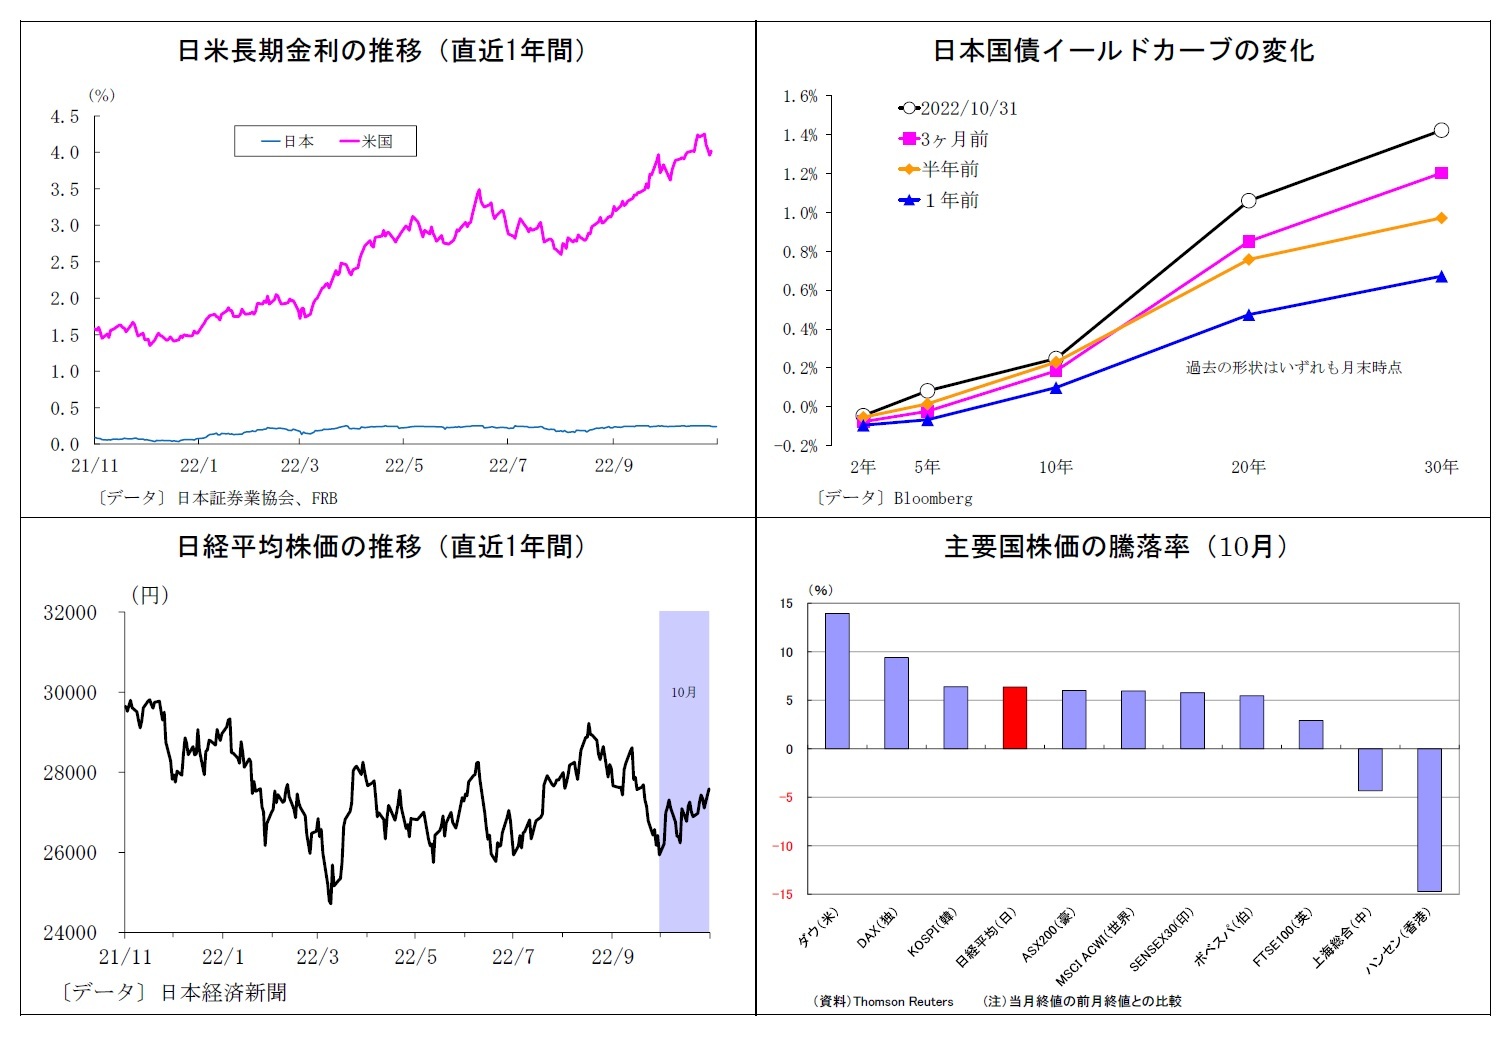 日米長期金利の推移（直近1年間）/日本国債イールドカーブの変化/日経平均株価の推移（直近1年間）/主要国株価の騰落率（10月）